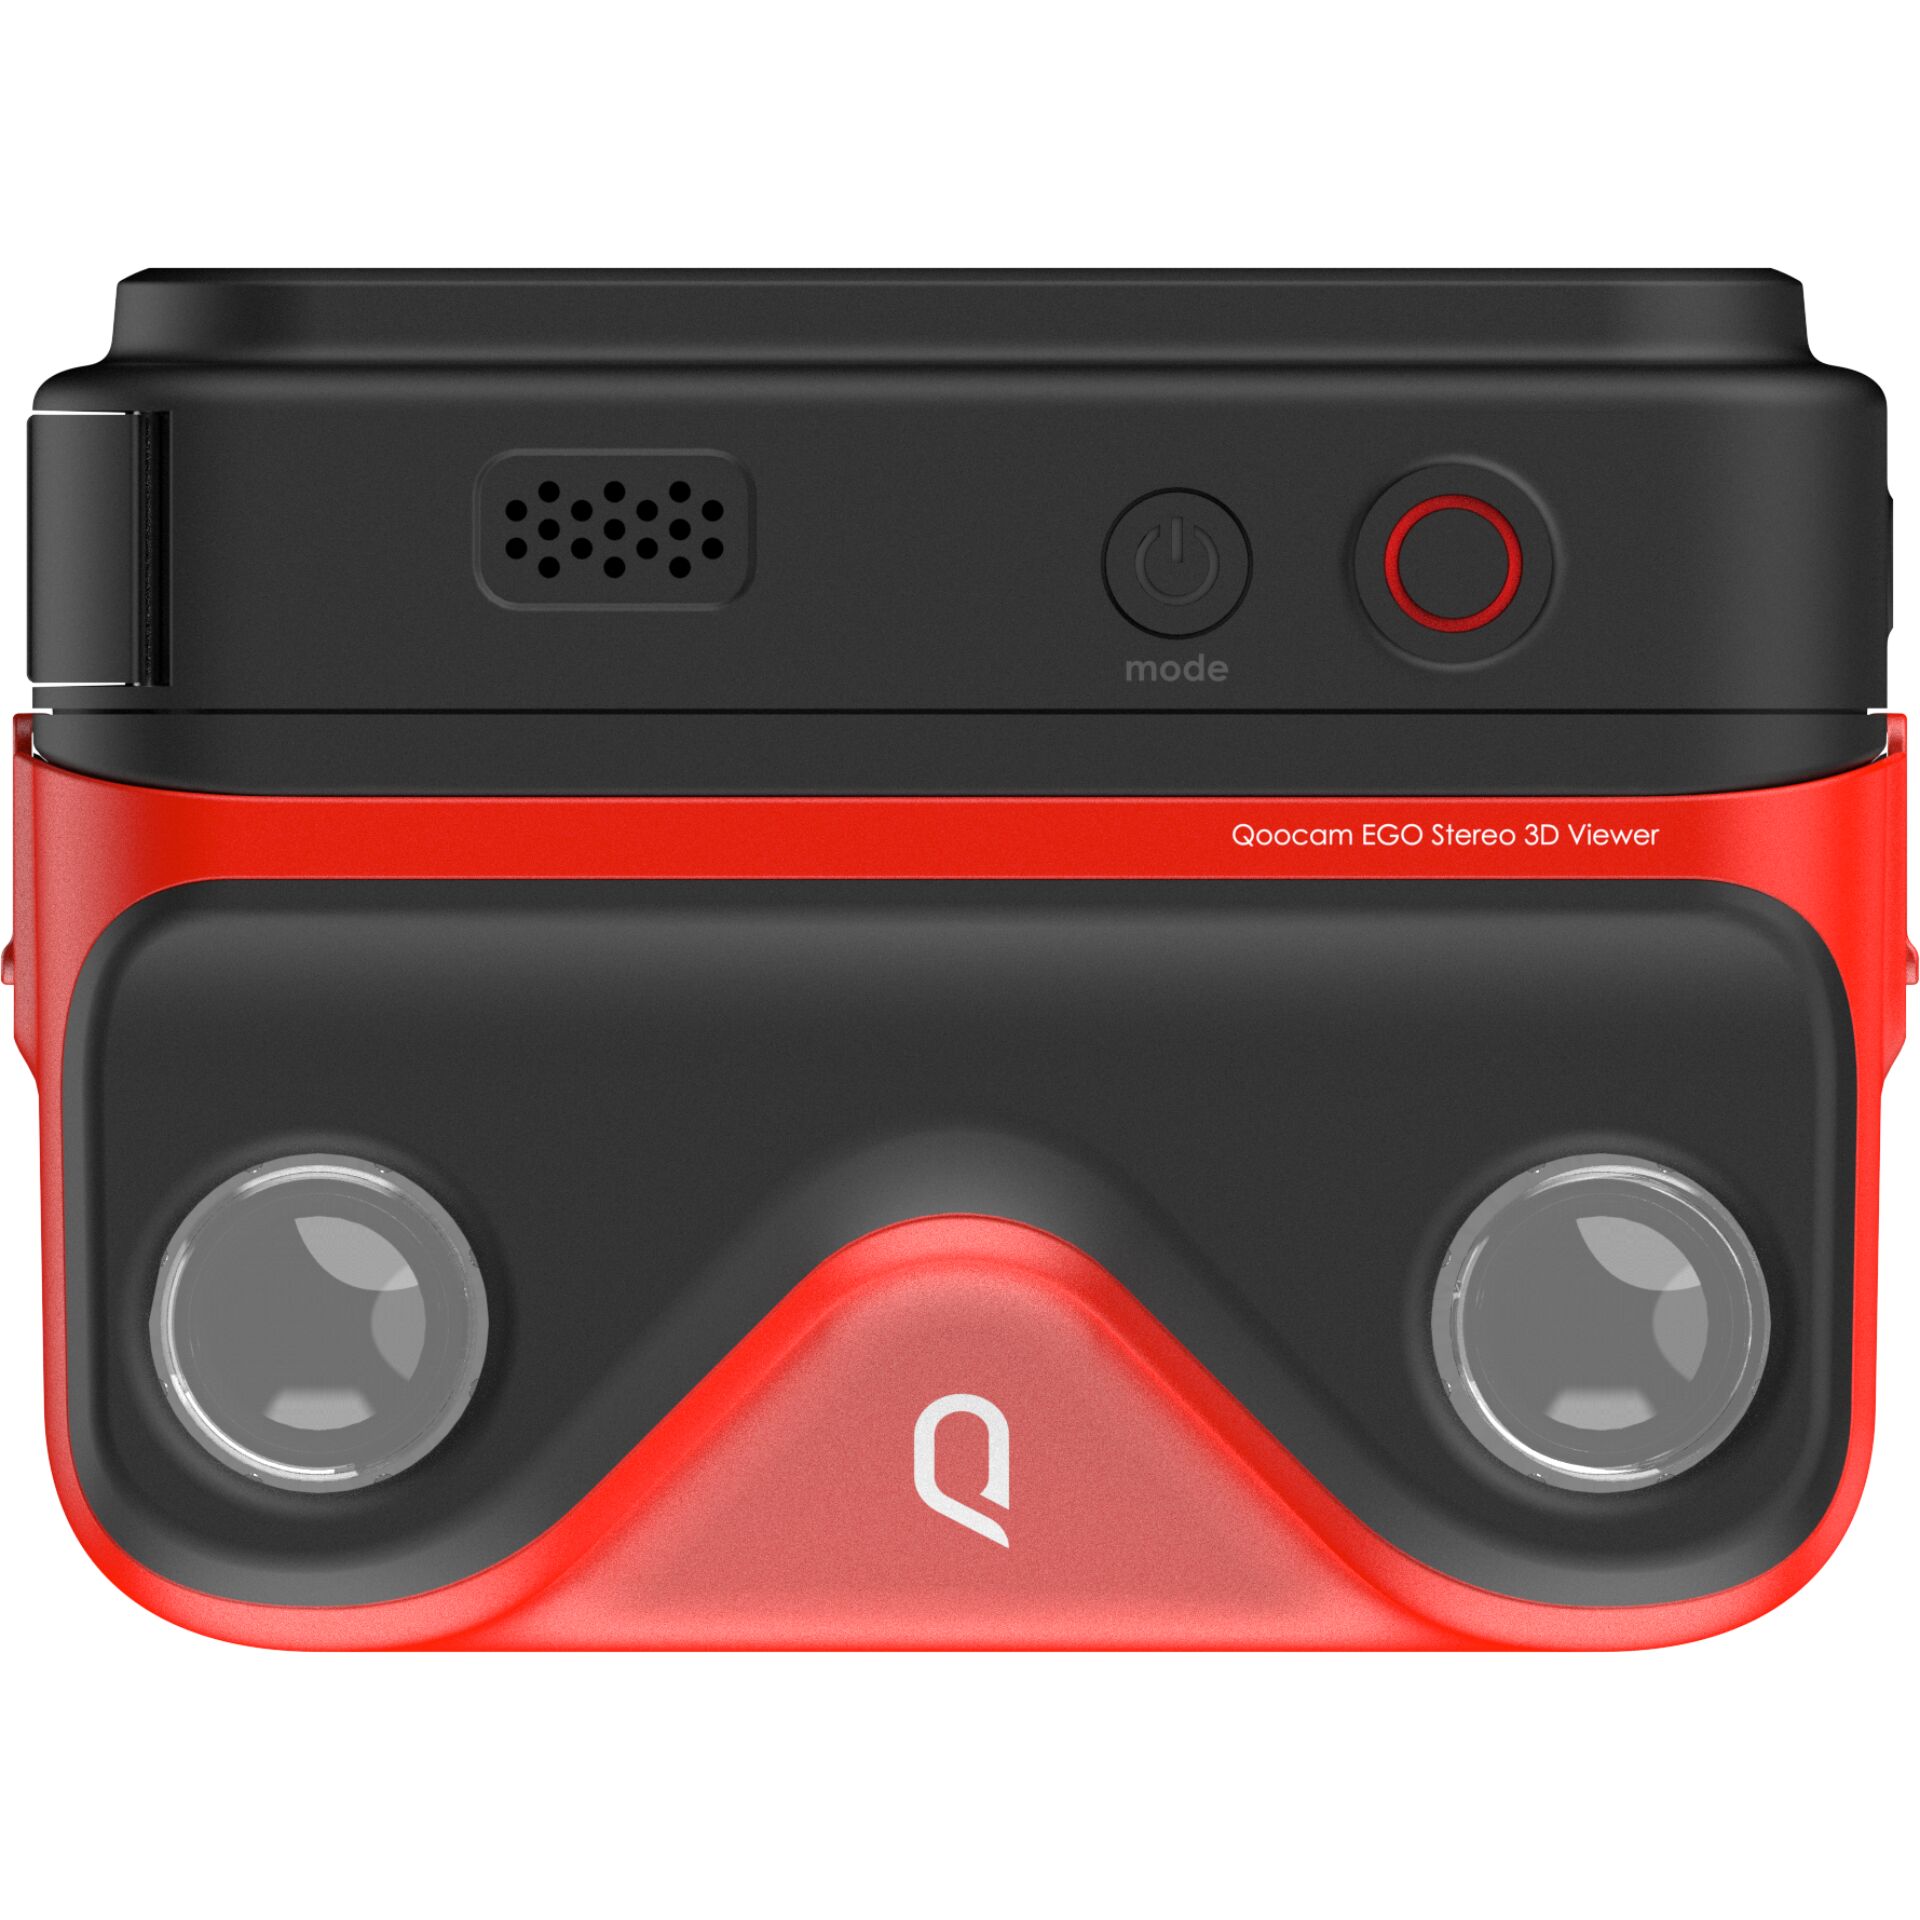 Kandao QooCam EGO 3D Kamera